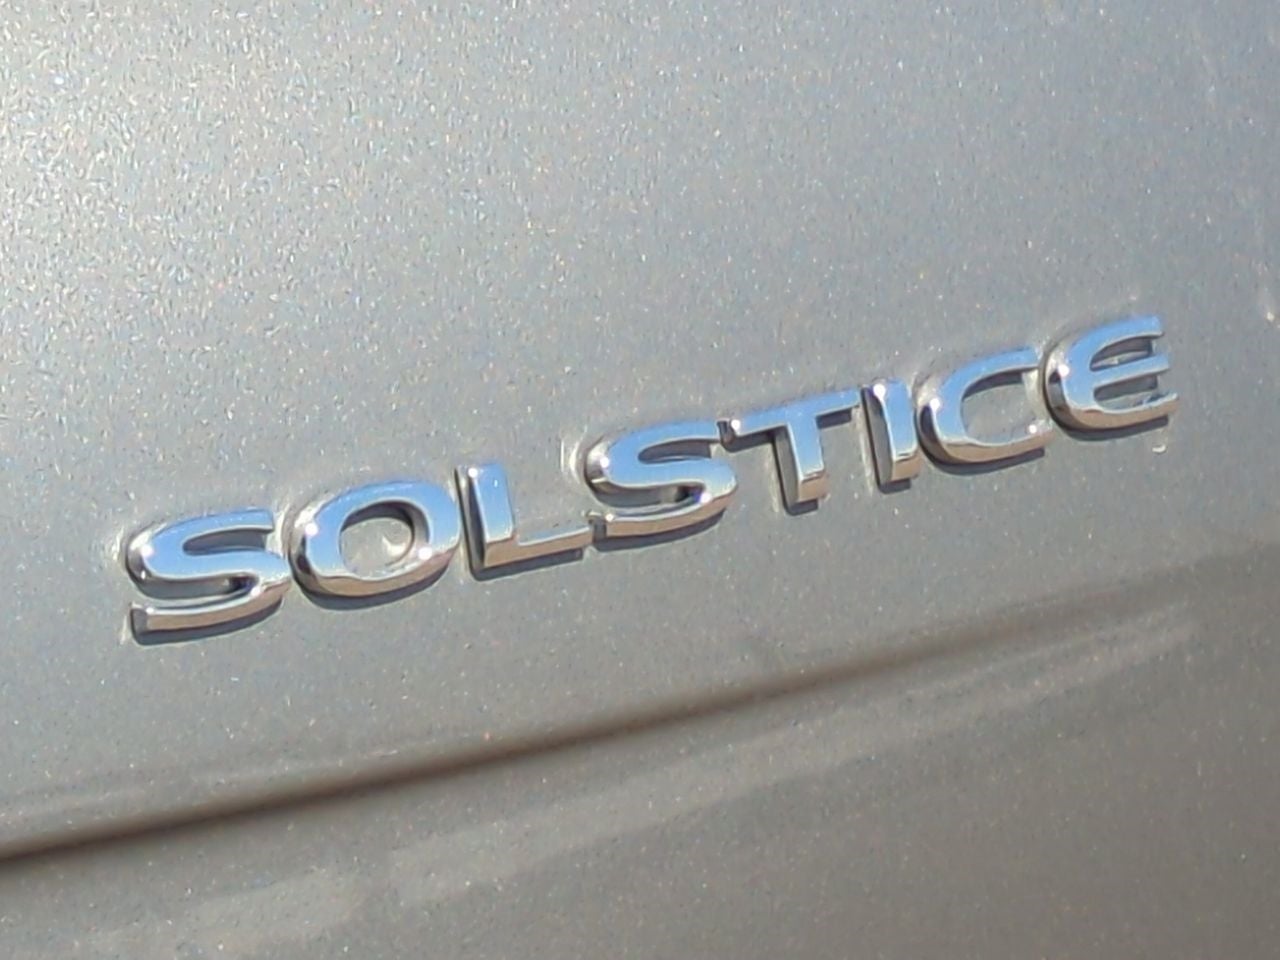 2006 Pontiac Solstice 2dr Convertible